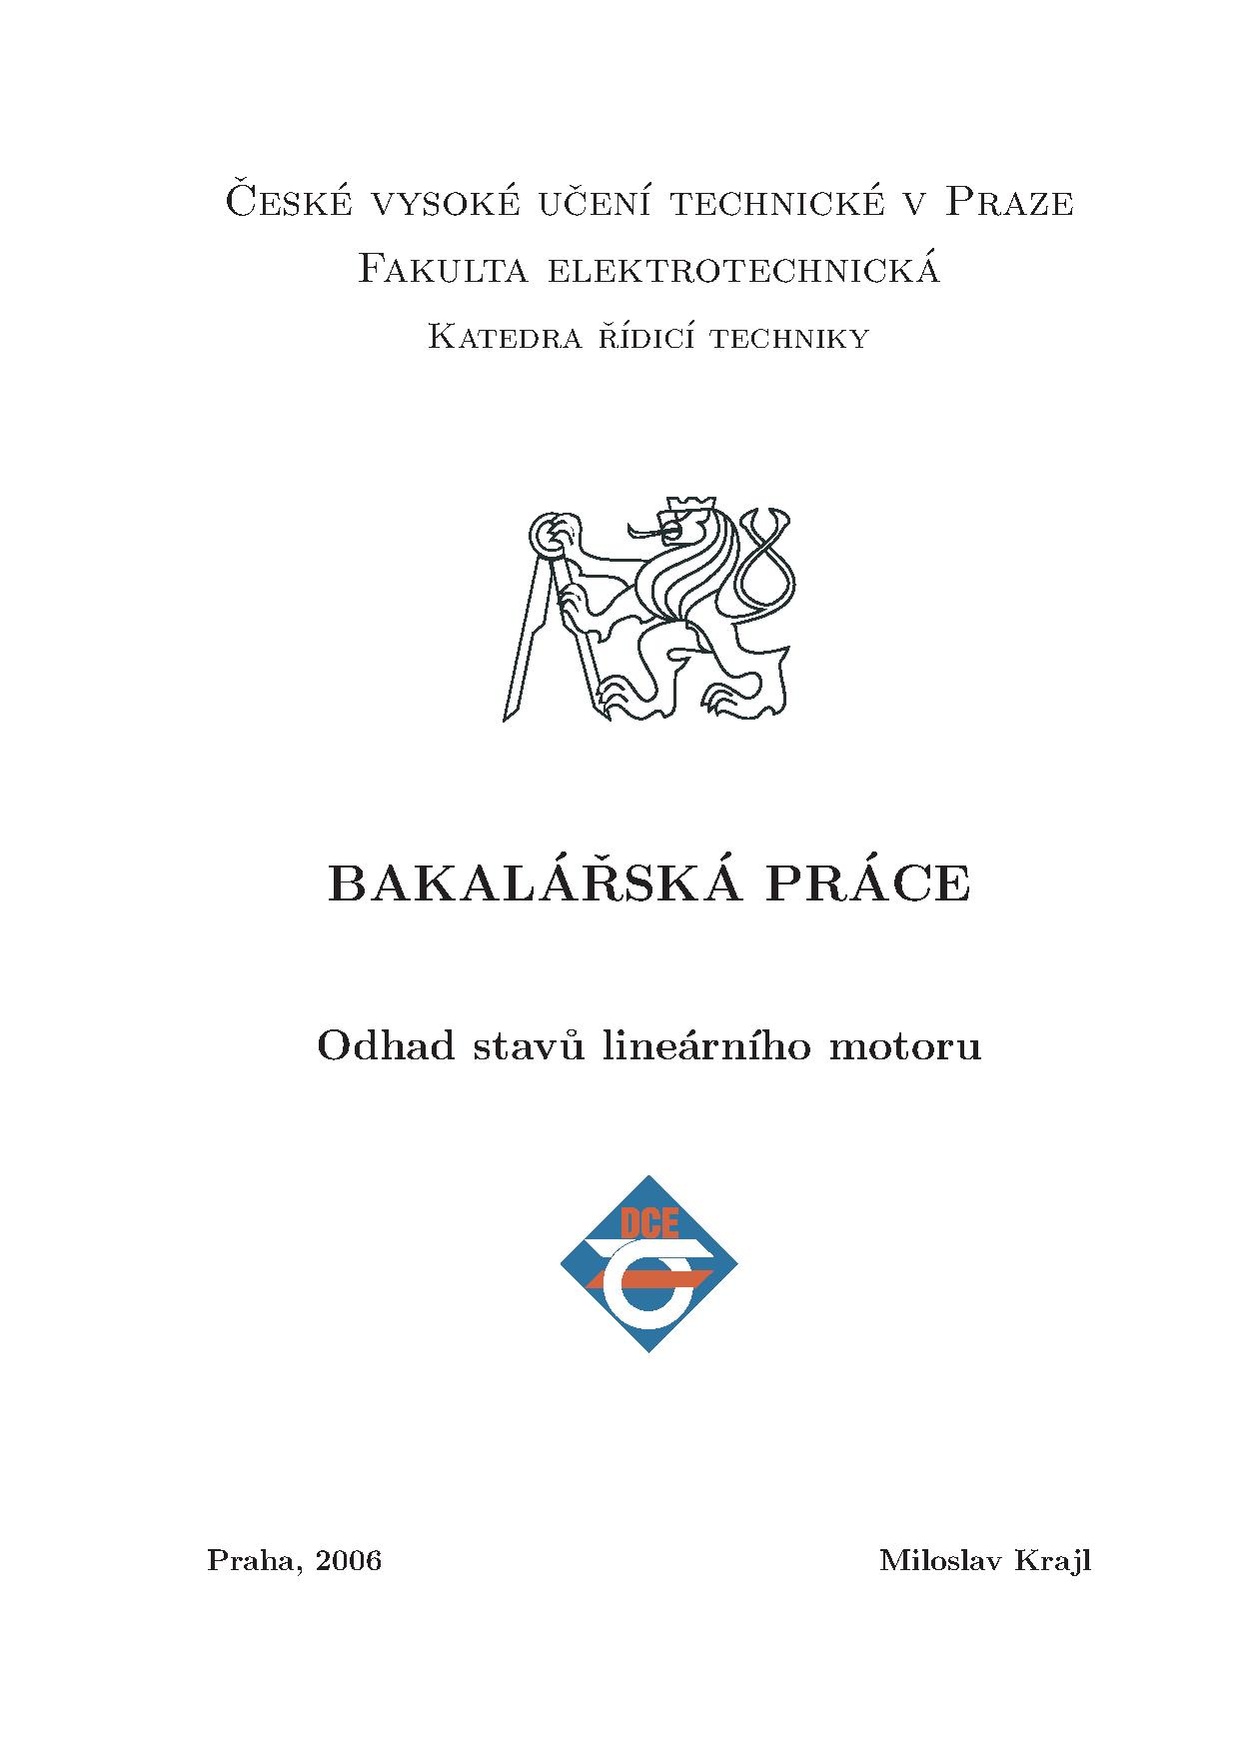 Bp 2006 krajl miloslav.pdf